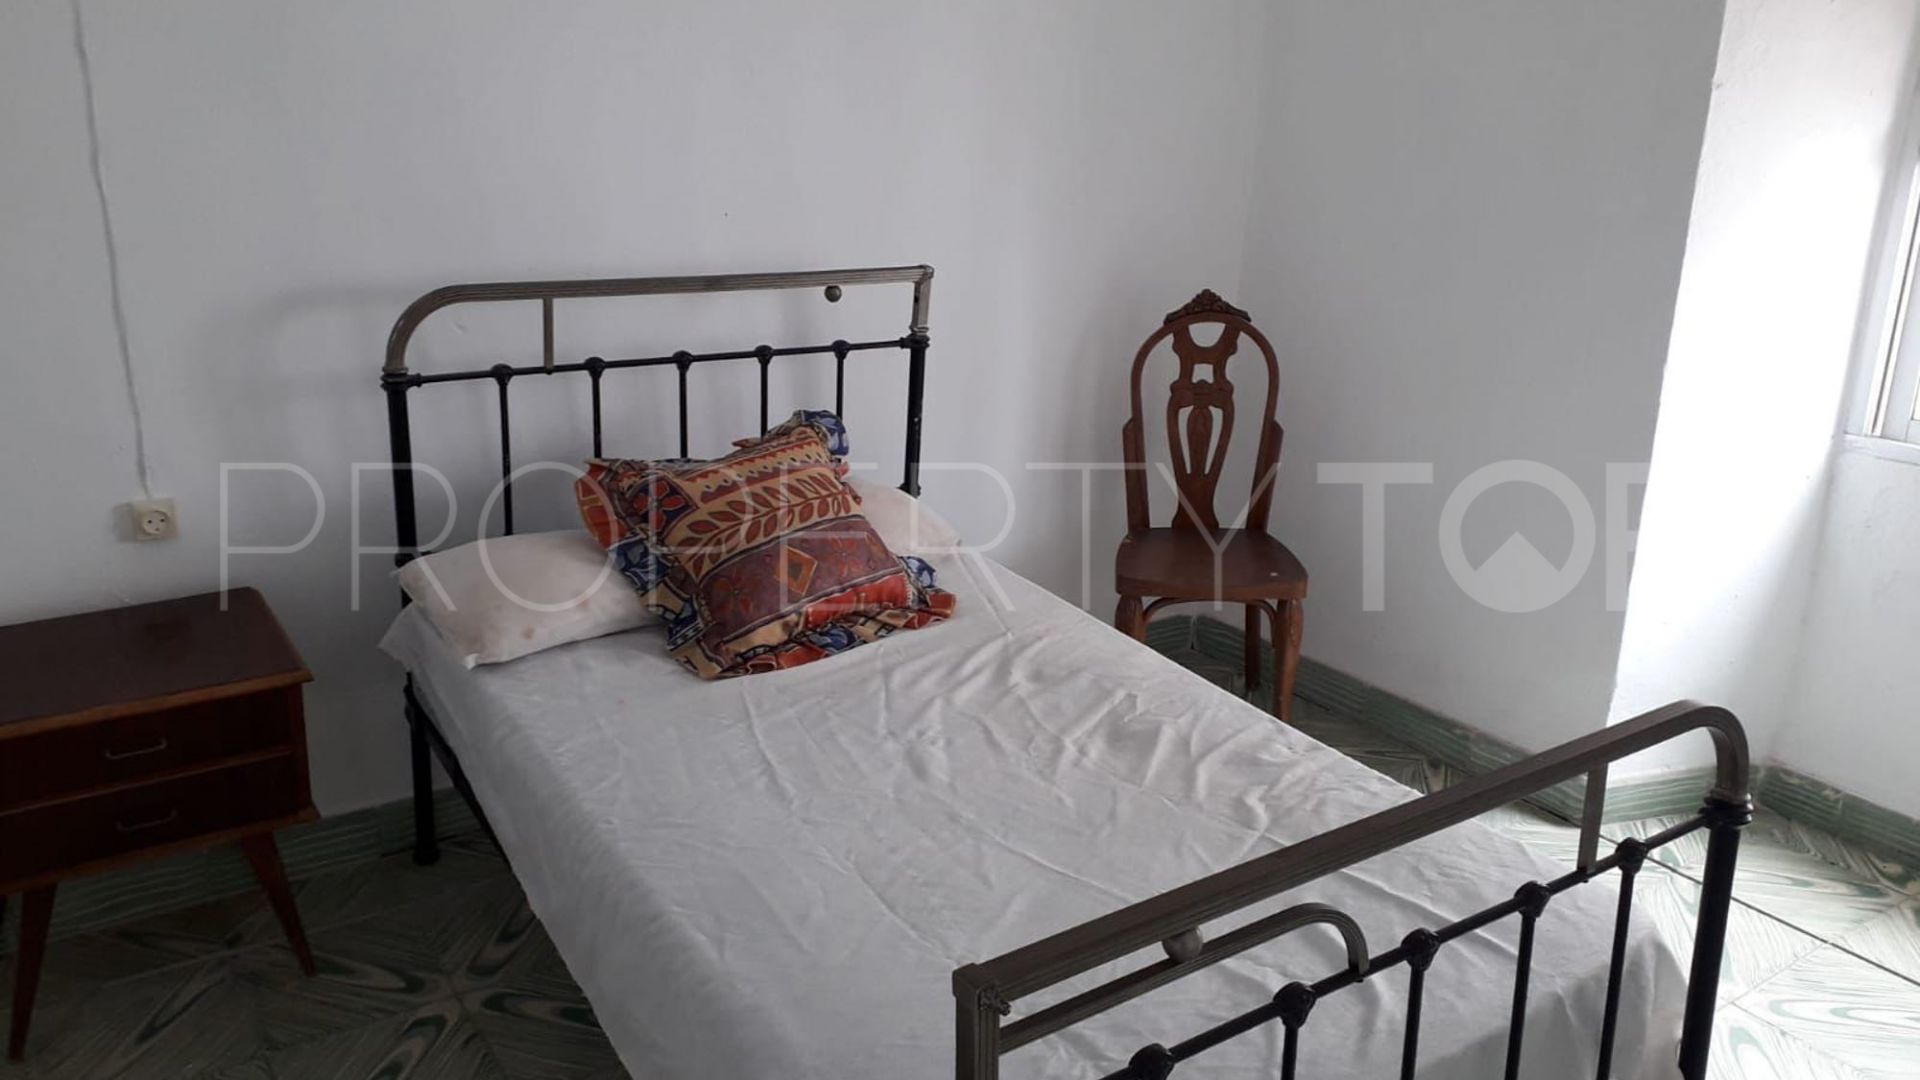 For sale Jimena de La Frontera town house with 8 bedrooms